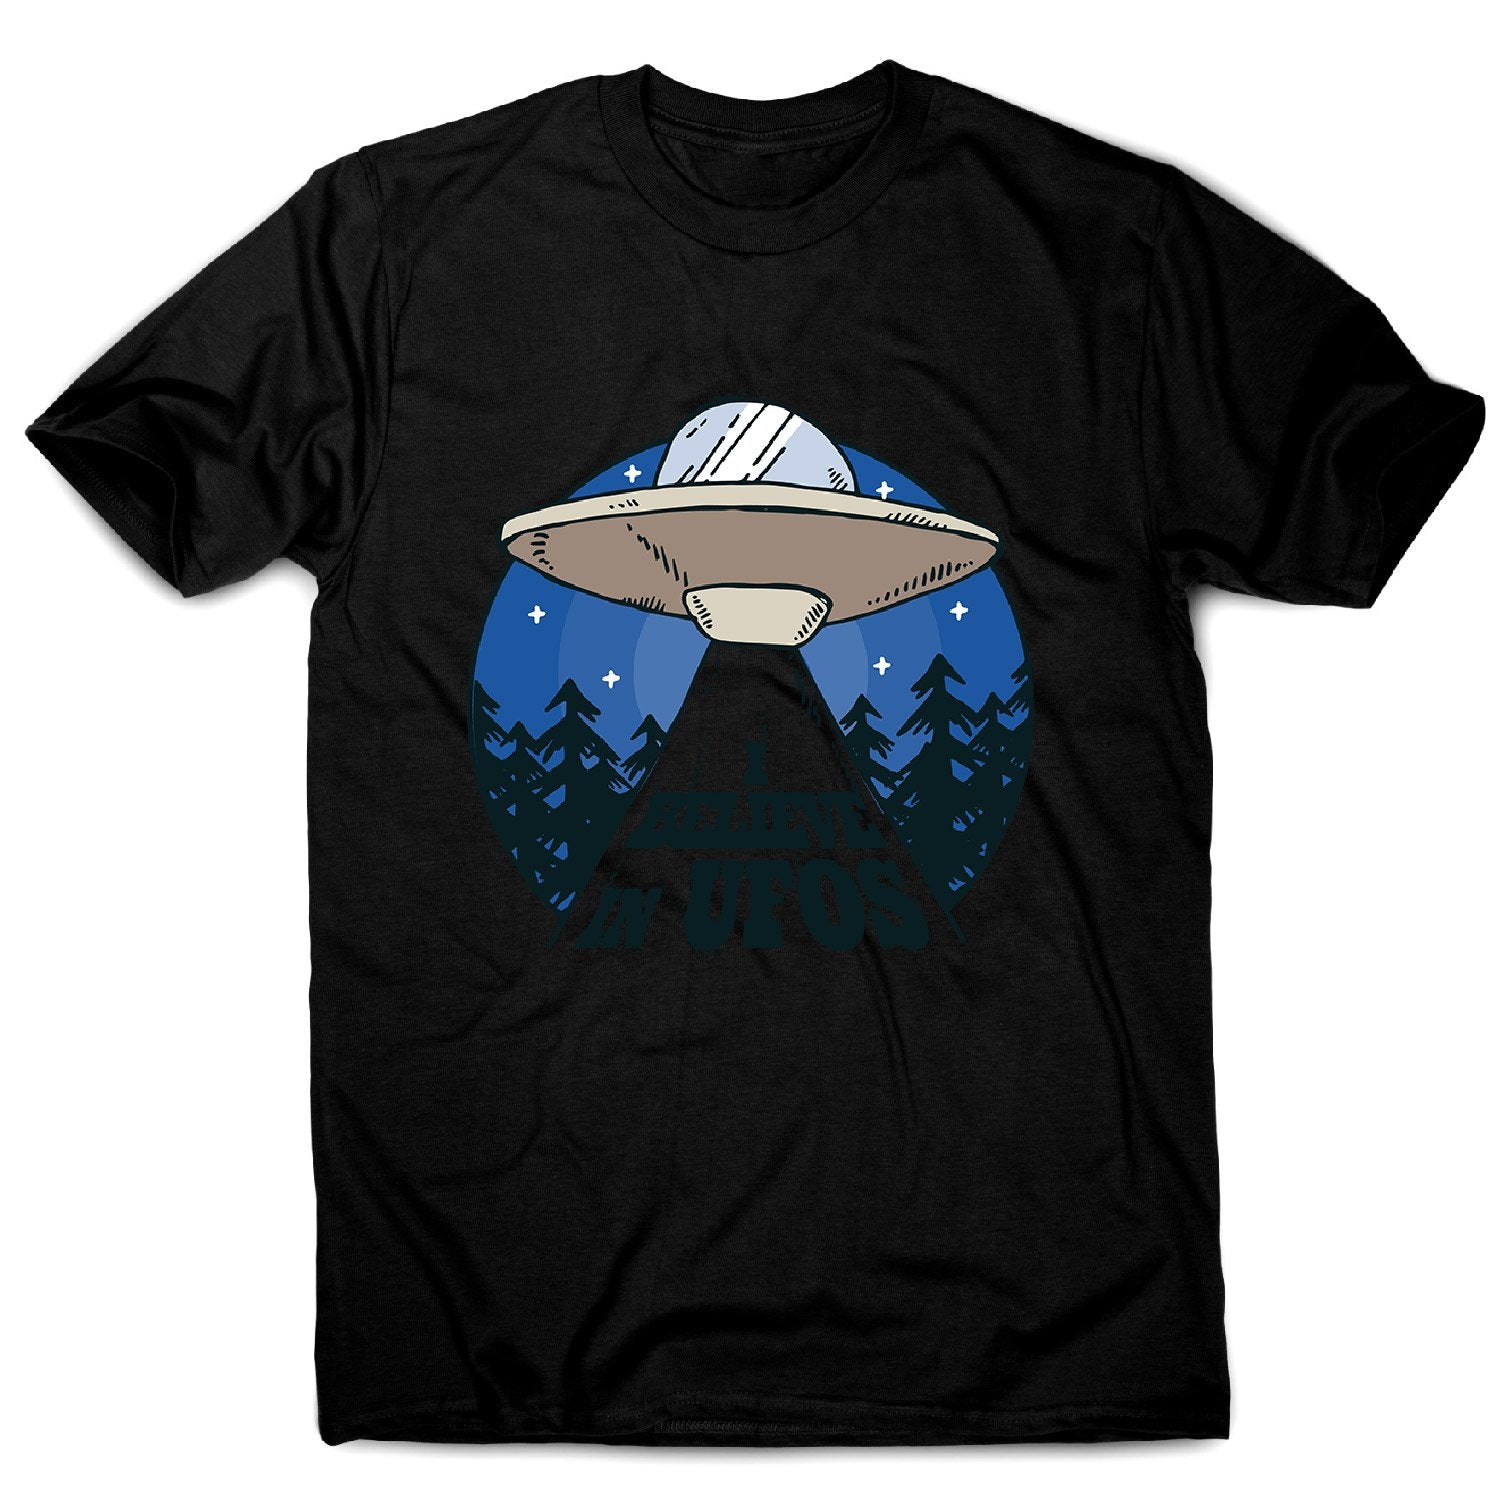 Funny slogan T shirts | Funny T shirts for men | Alien spaceship - men ...